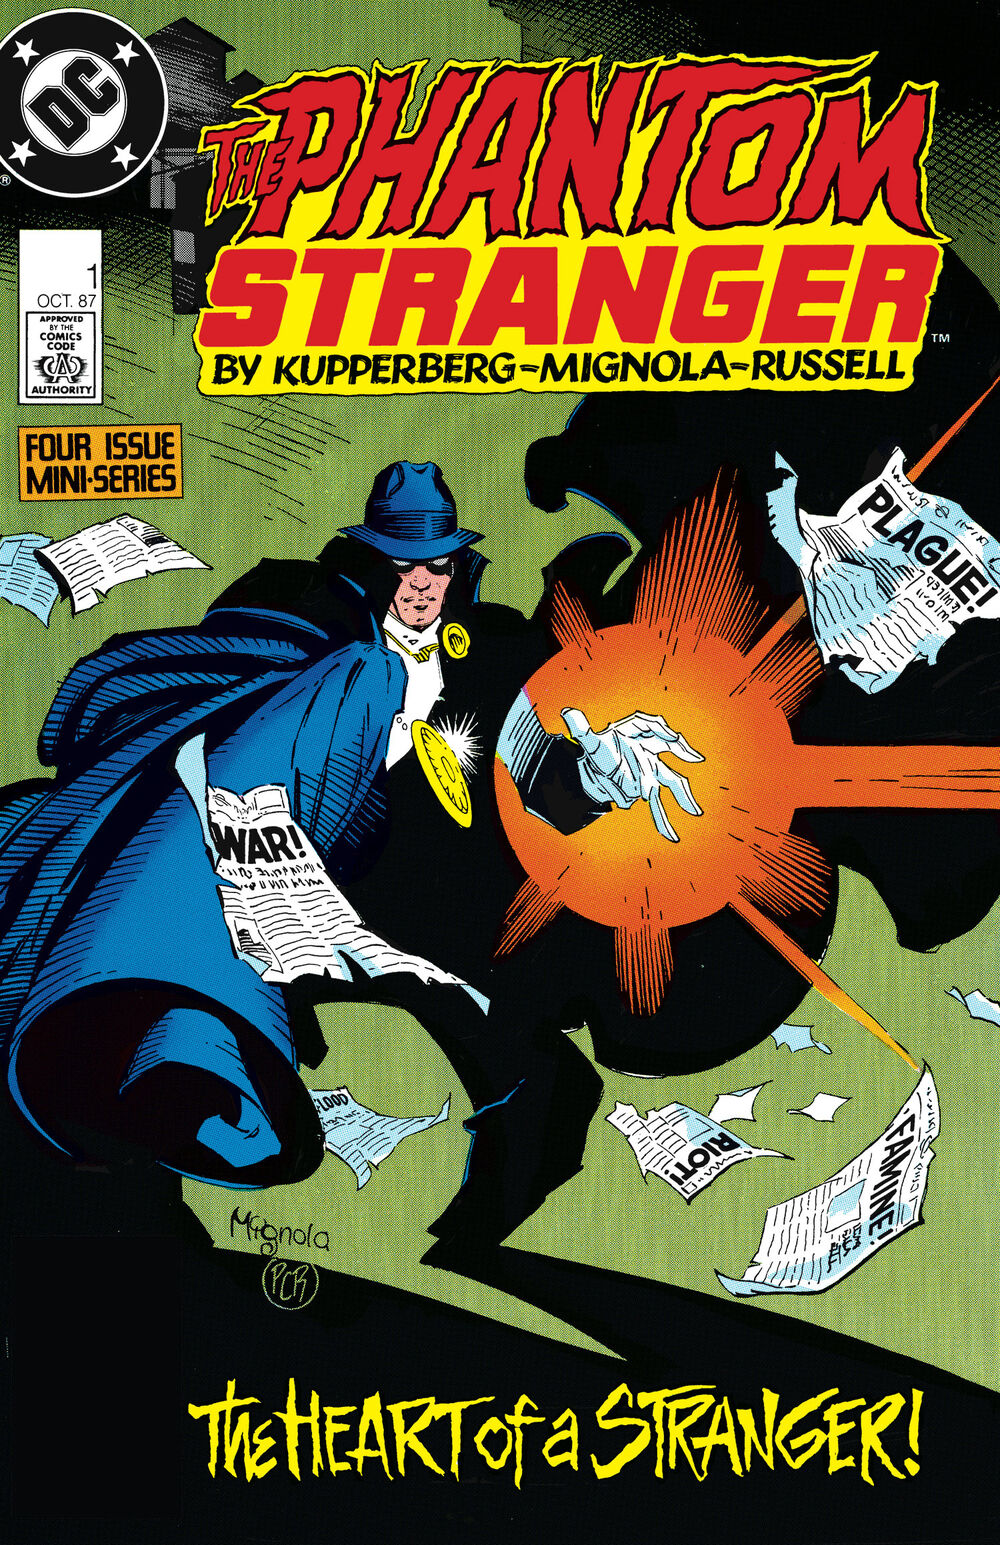 The Phantom Stranger Volume 3 Limited Series Bundle Issues 1-4